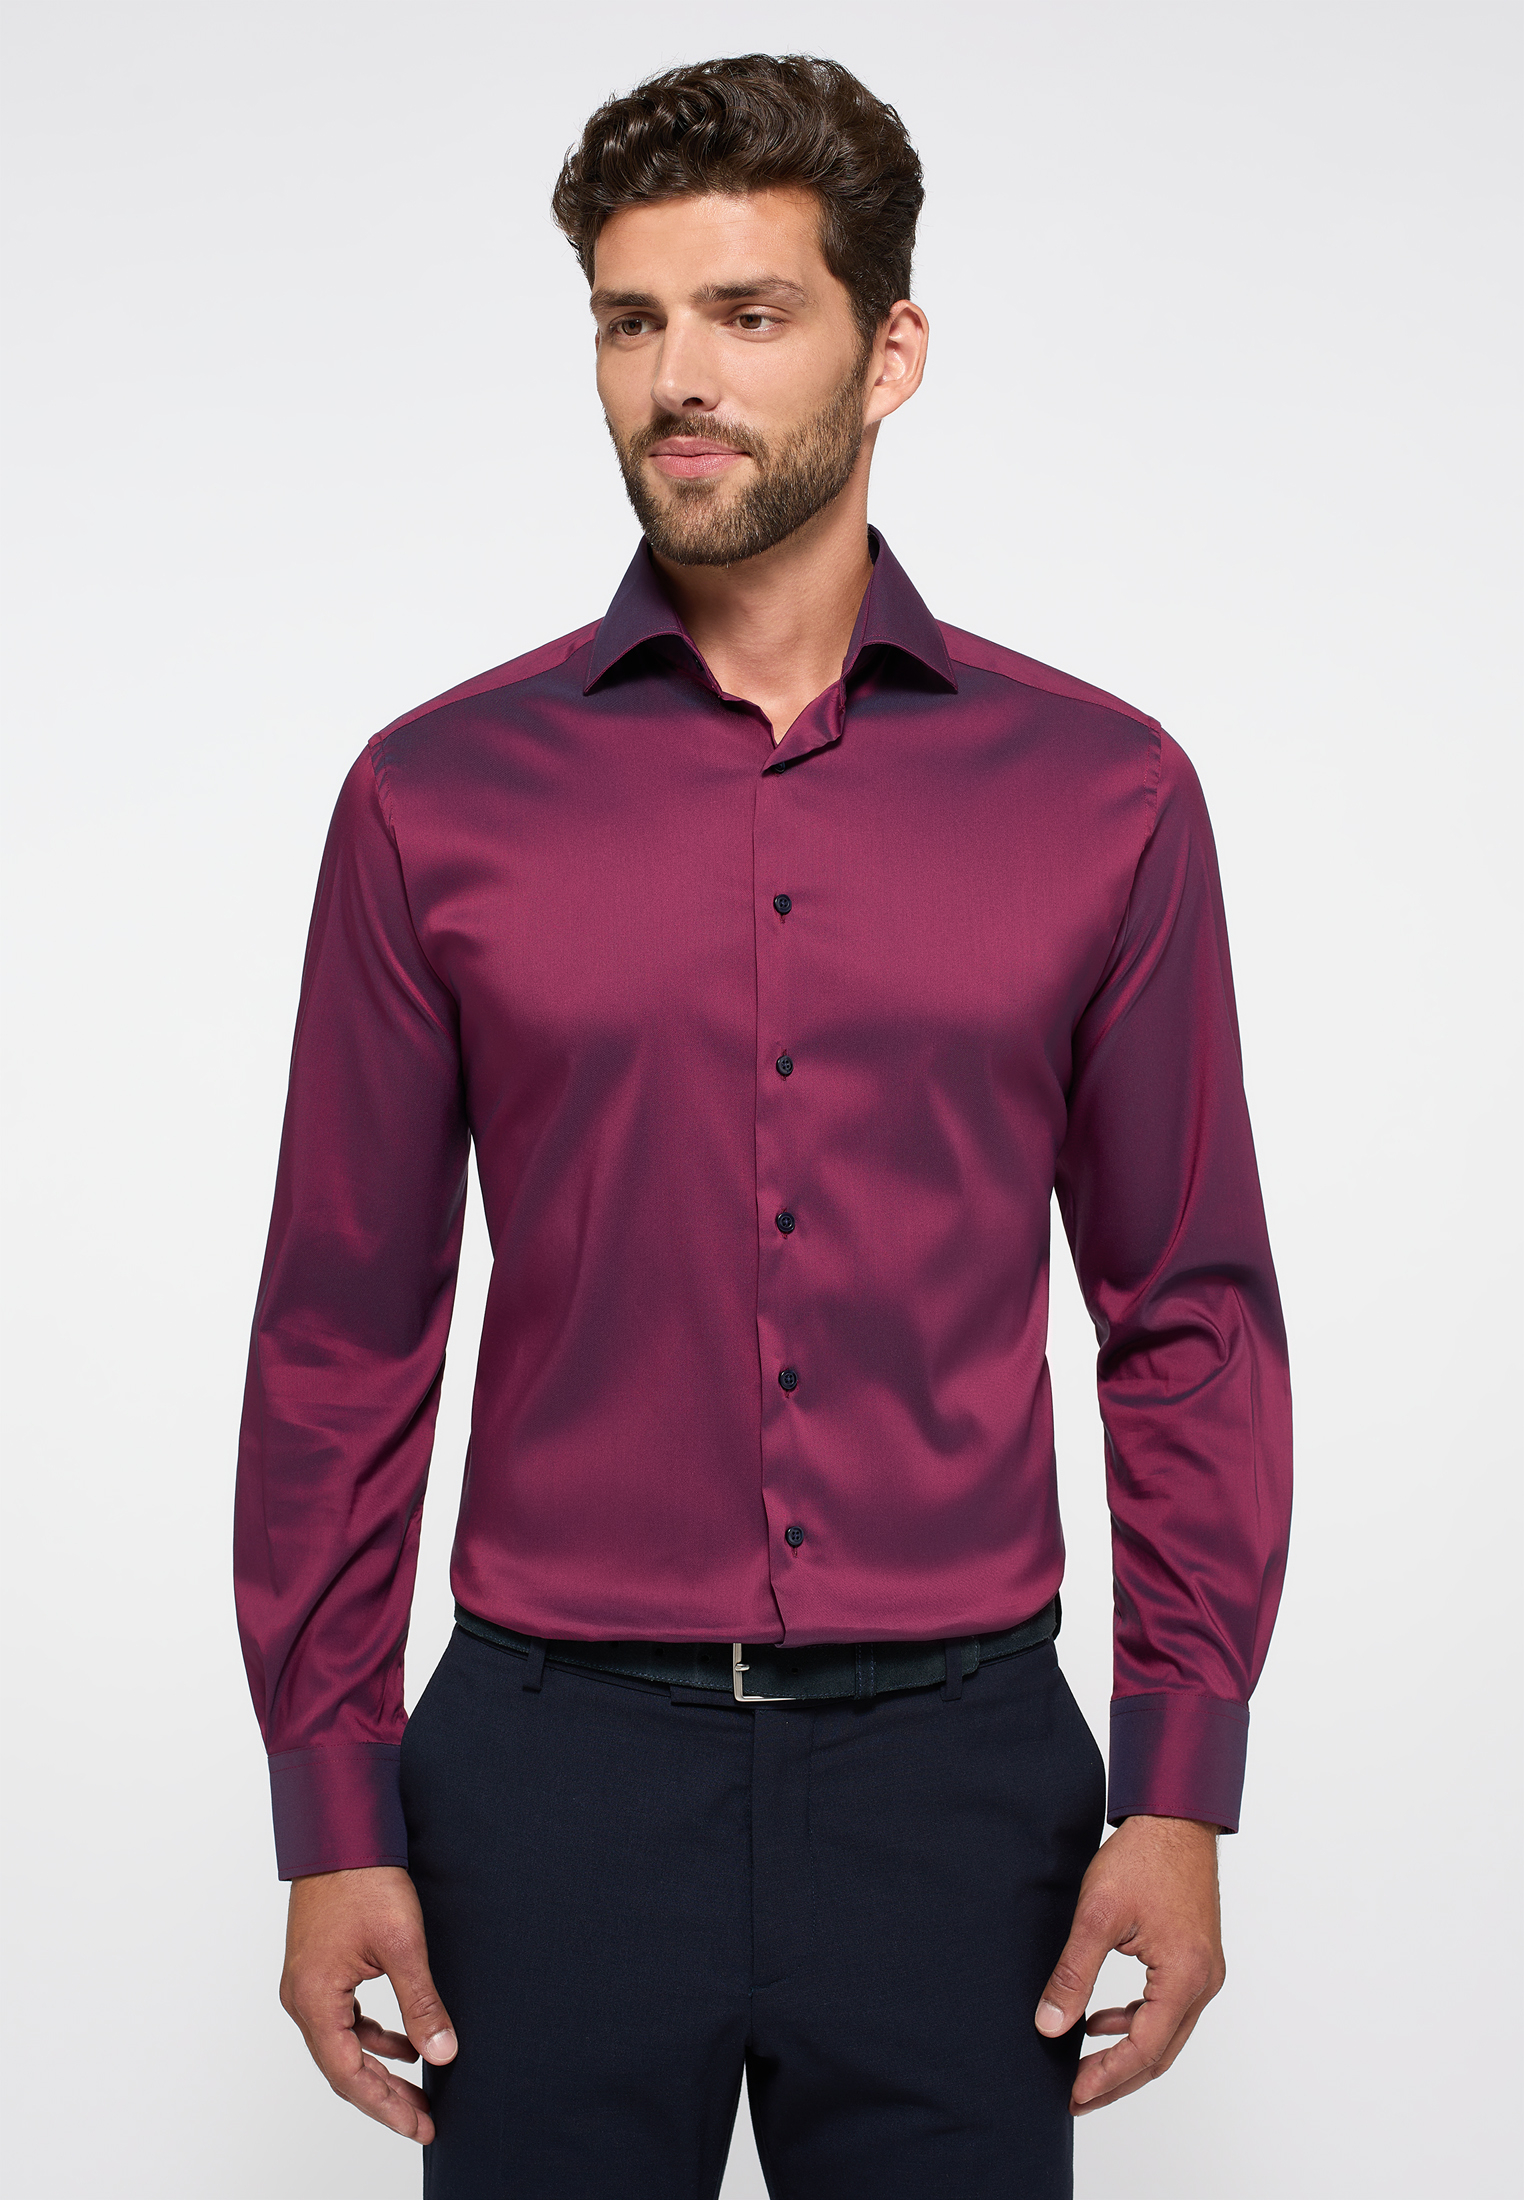 MODERN FIT burgunder unifarben burgunder | Shirt Langarm 1SH02224-05-81-48-1/1 | Performance 48 | in 